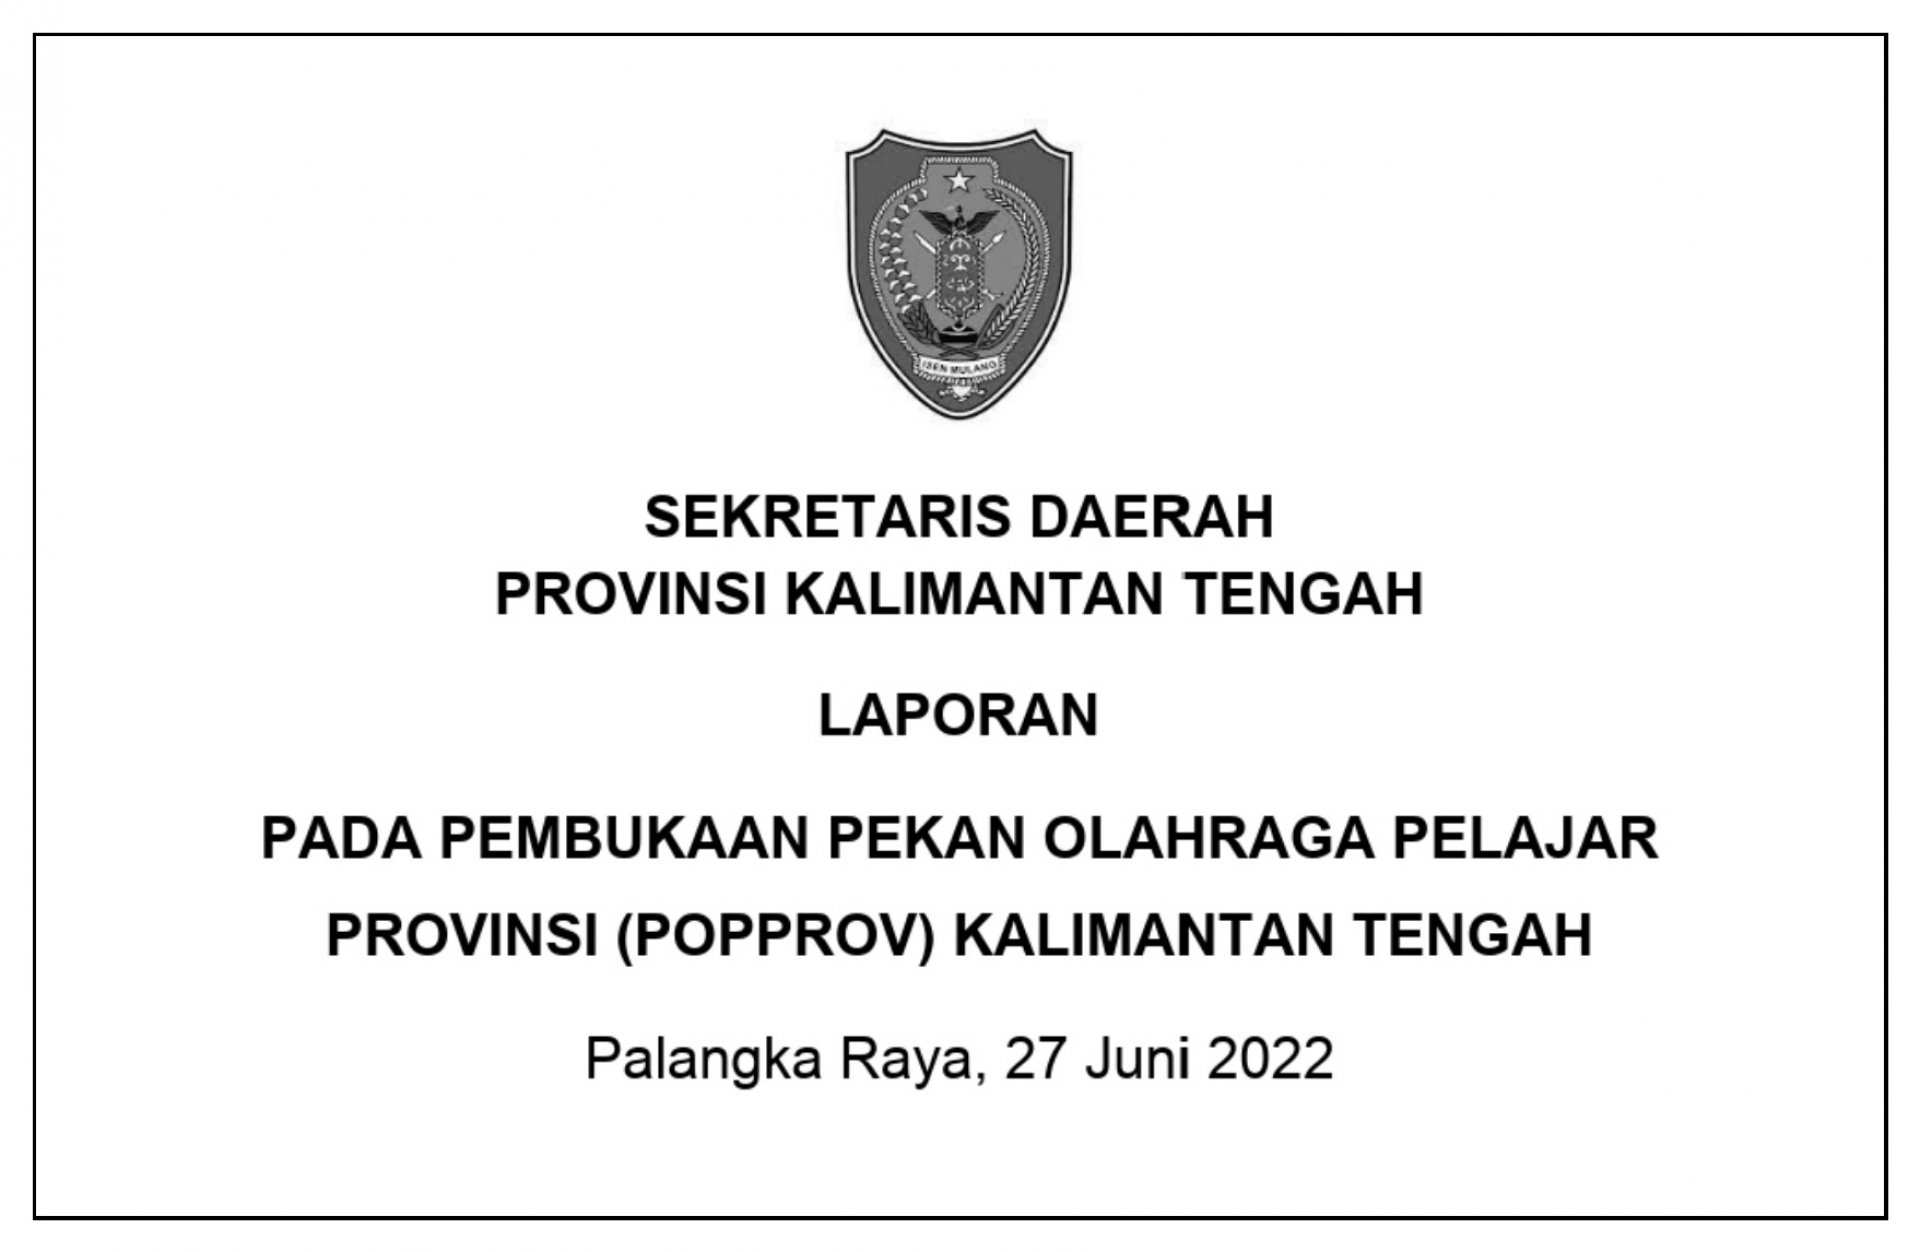 Laporan Sekretaris Daerah pada Pembukaan POPPROV Kalimantan Tengah Tahun 2022